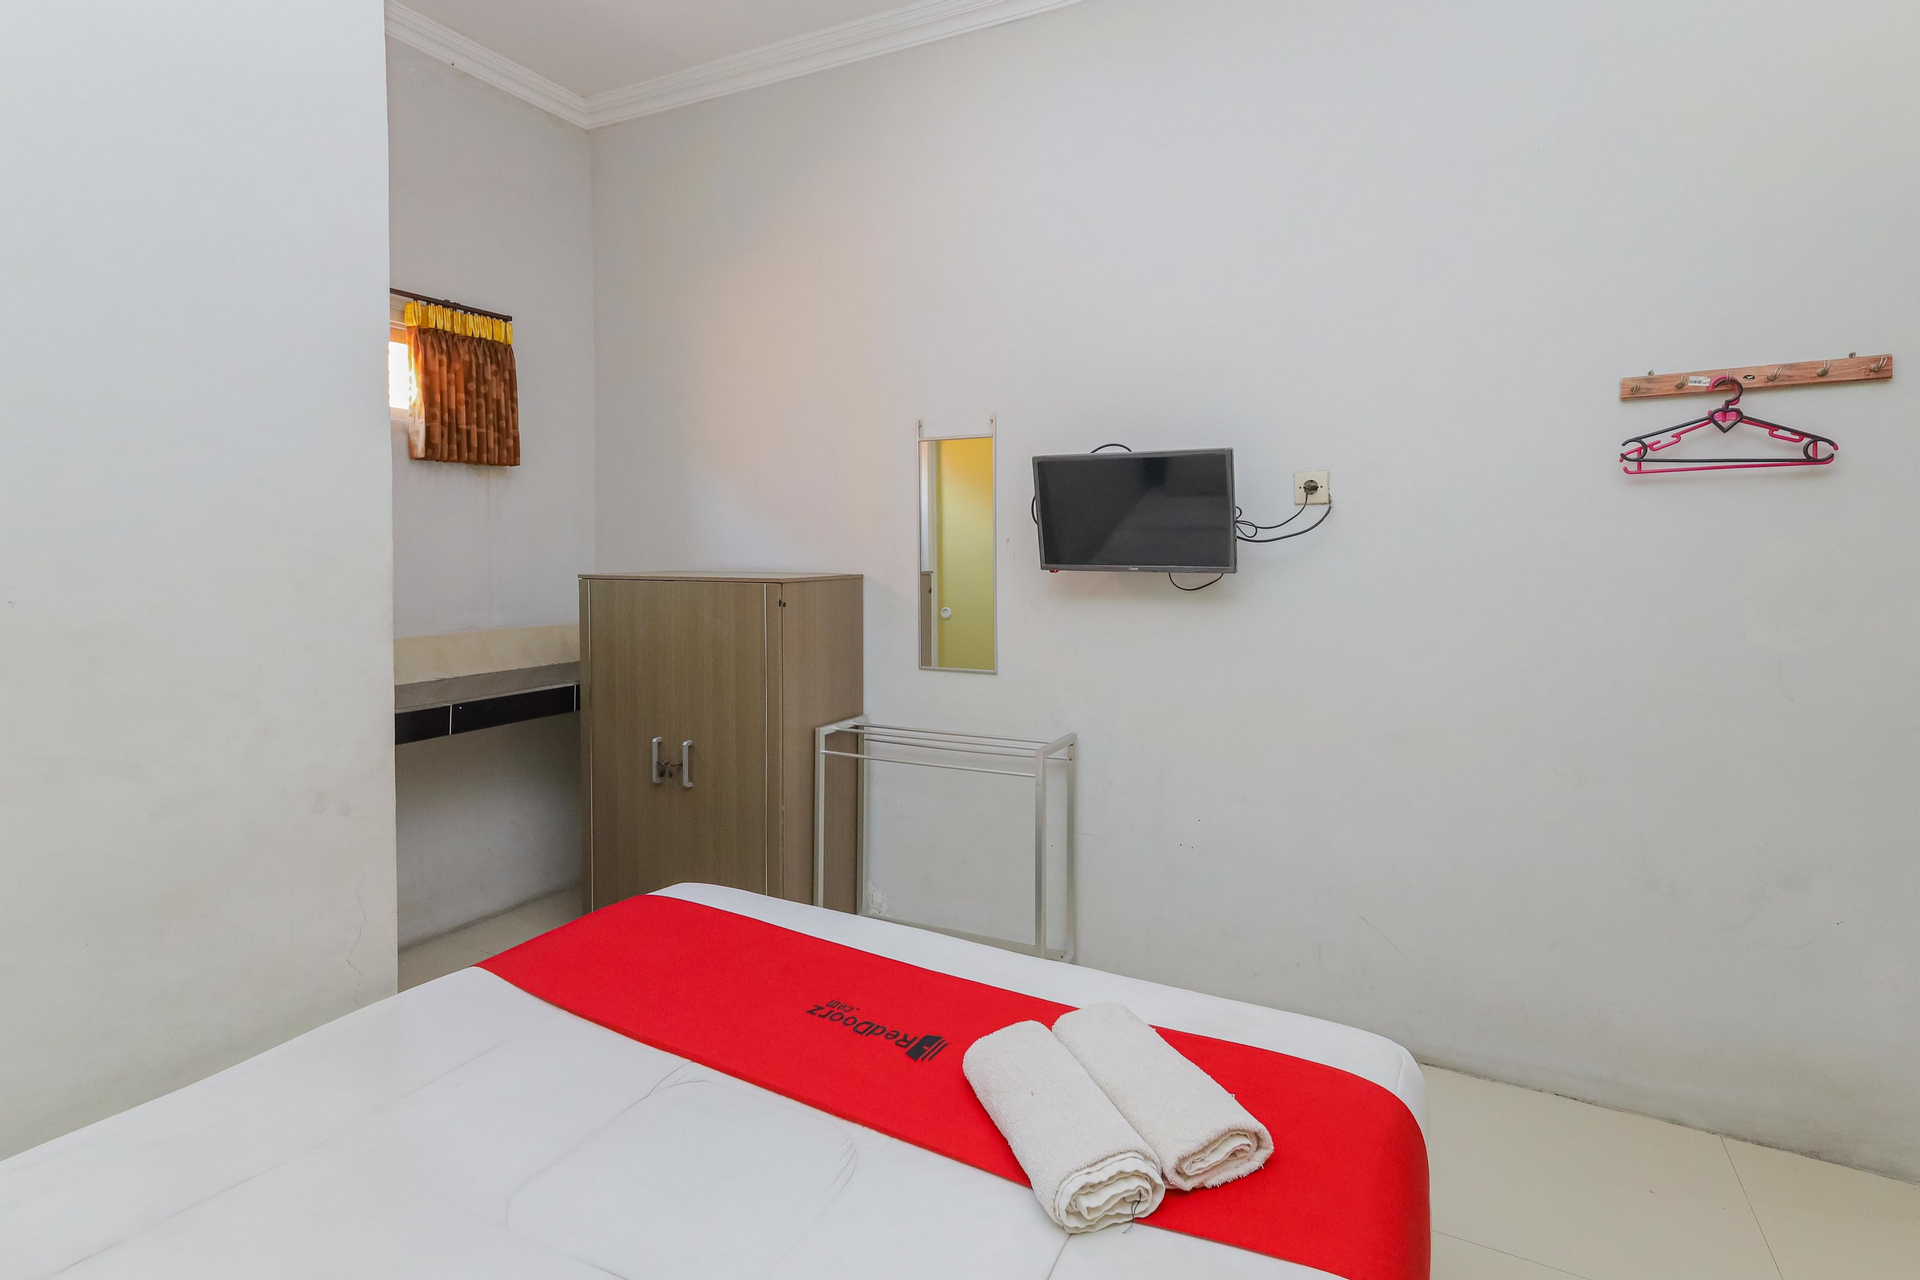 Bedroom 3, RedDoorz near Juanda International Airport 2, Surabaya